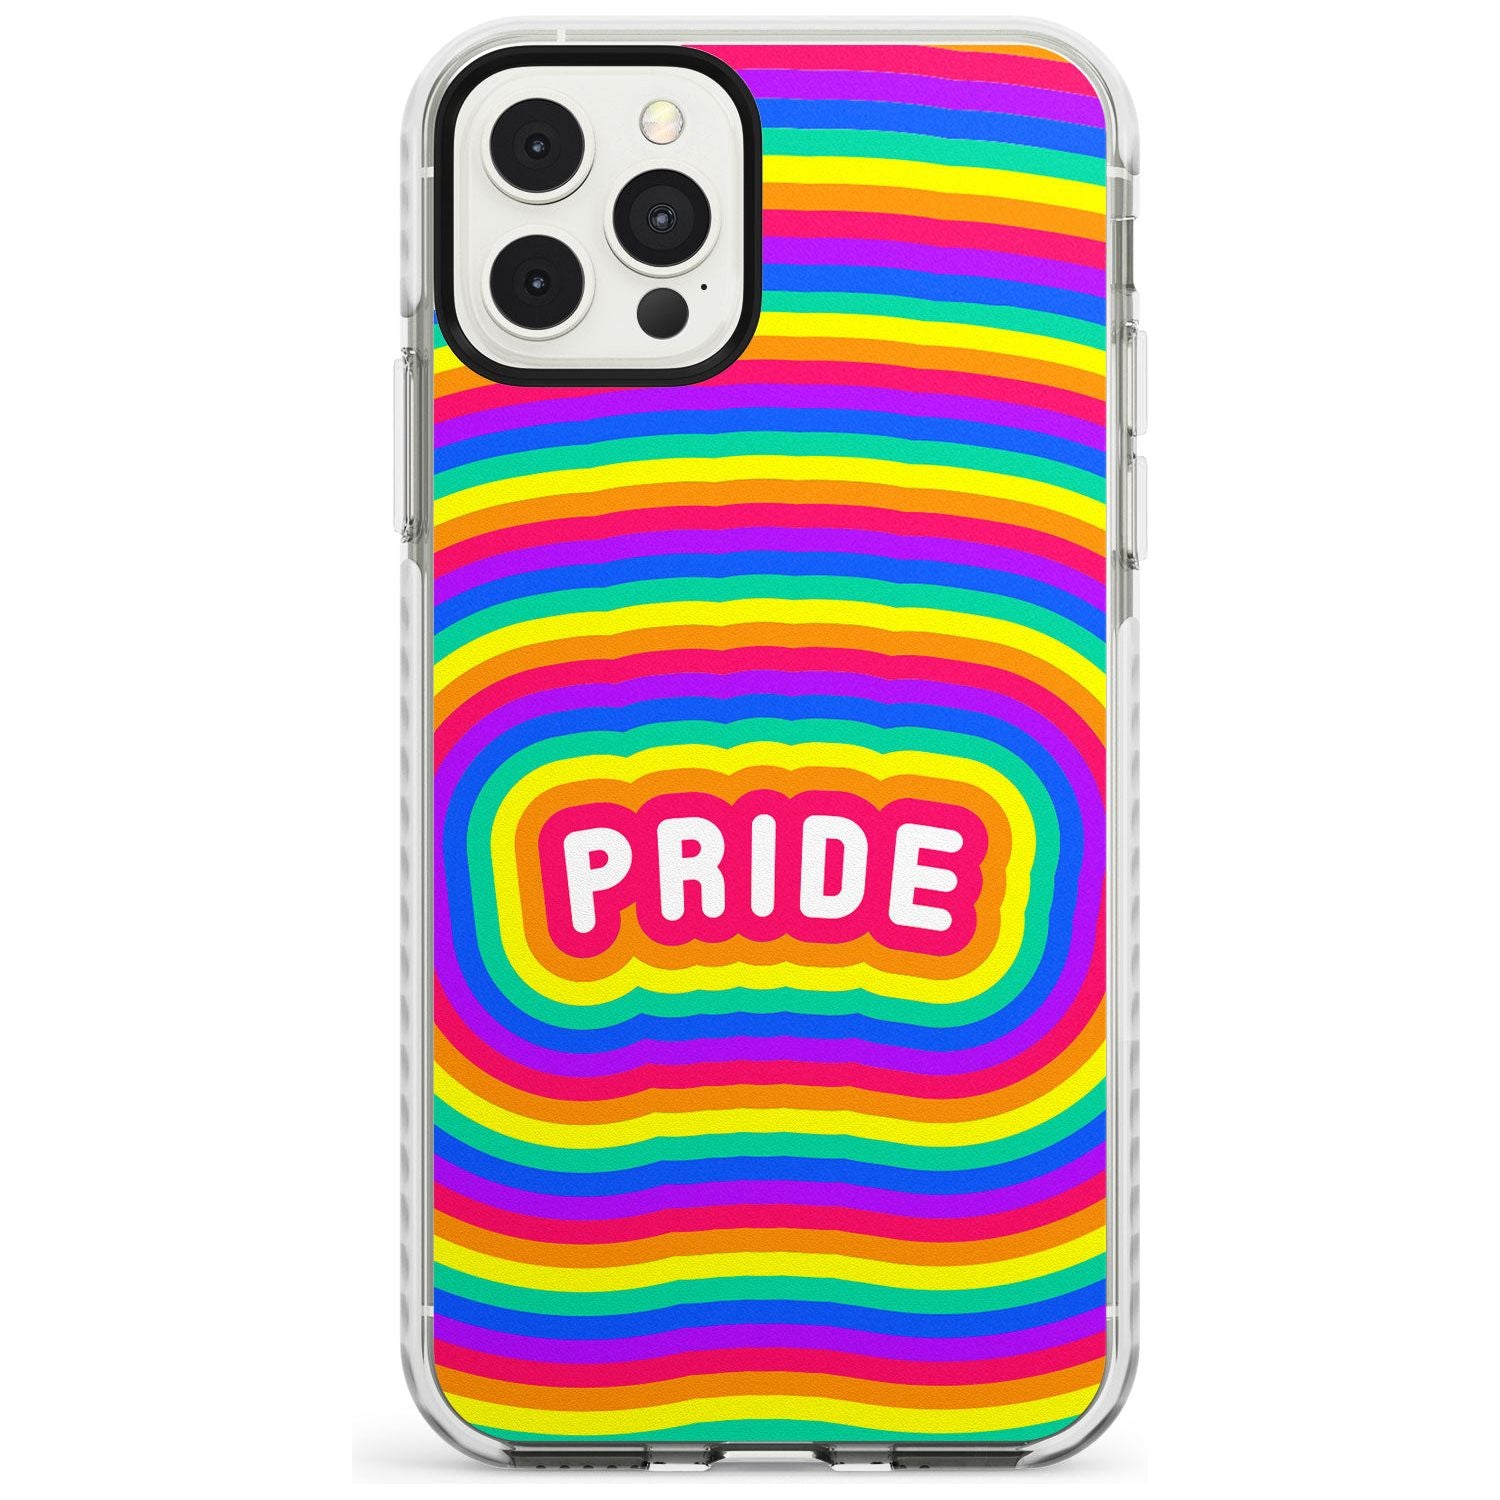 Pride Impact Phone Case for iPhone 11 Pro Max